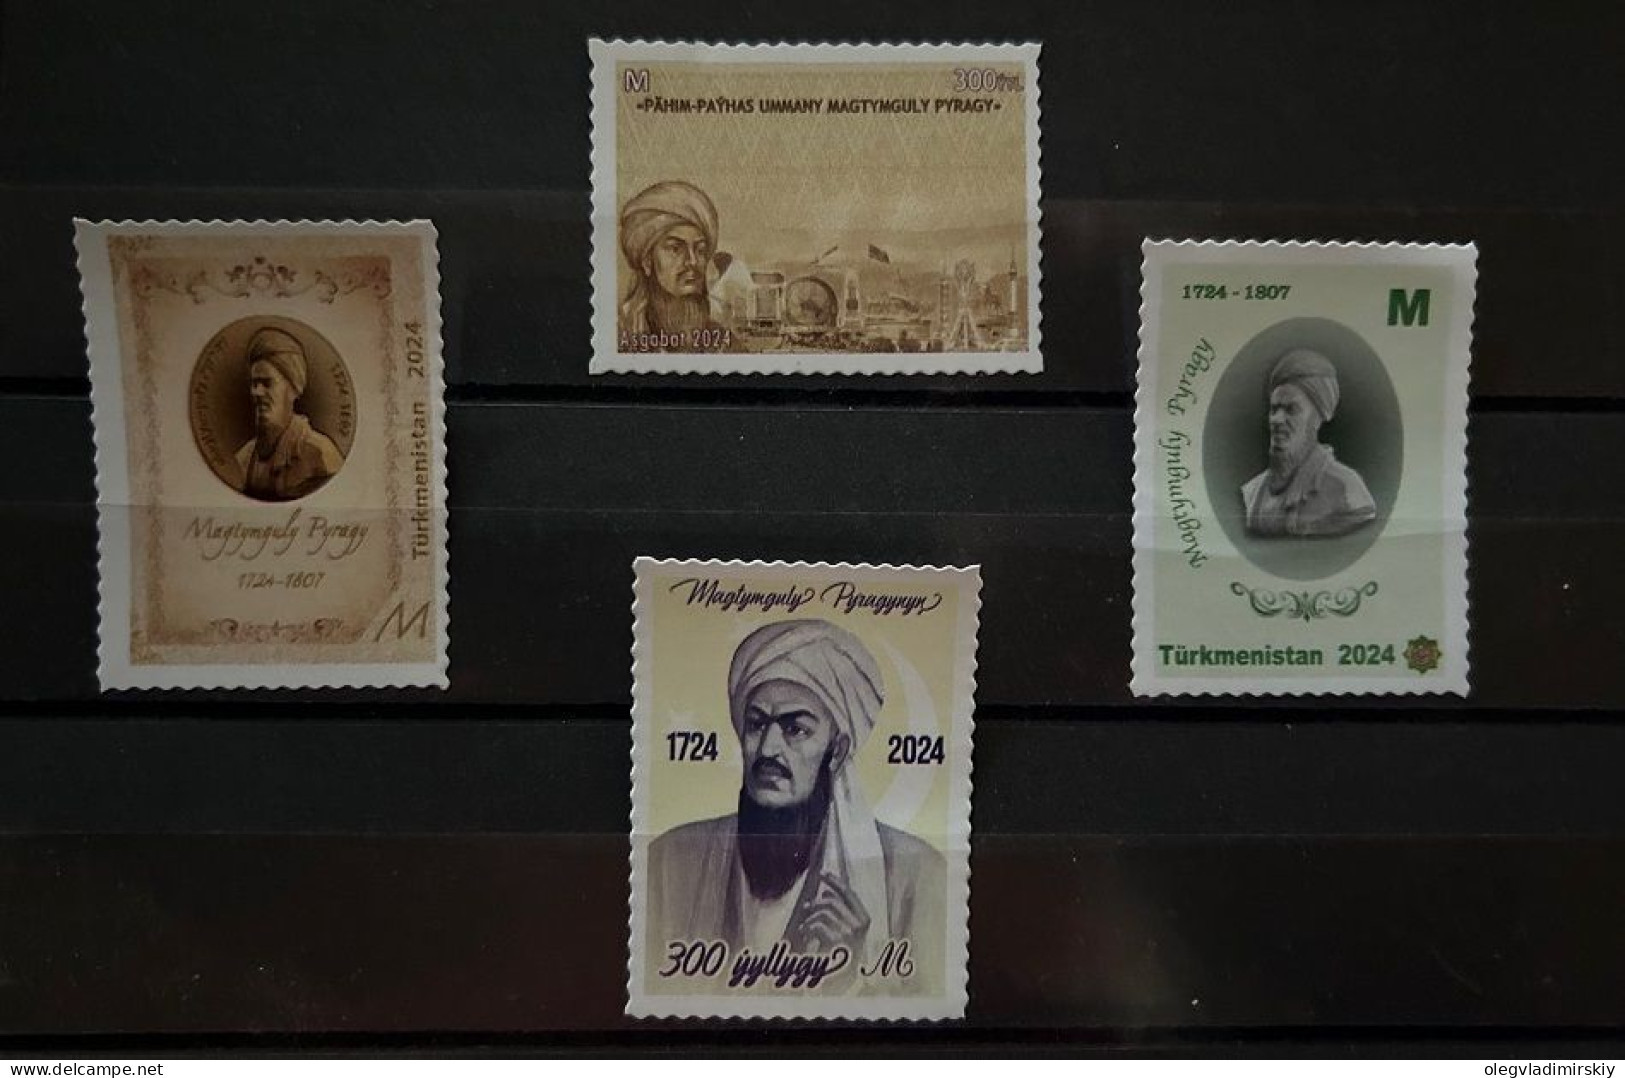 Turkmenistan 2024 Magtymguly Maxdumqoli Faraği مخدومقلی فراغی Great Poet Philosopher Set Of 4 Stamps MNH - Turkménistan